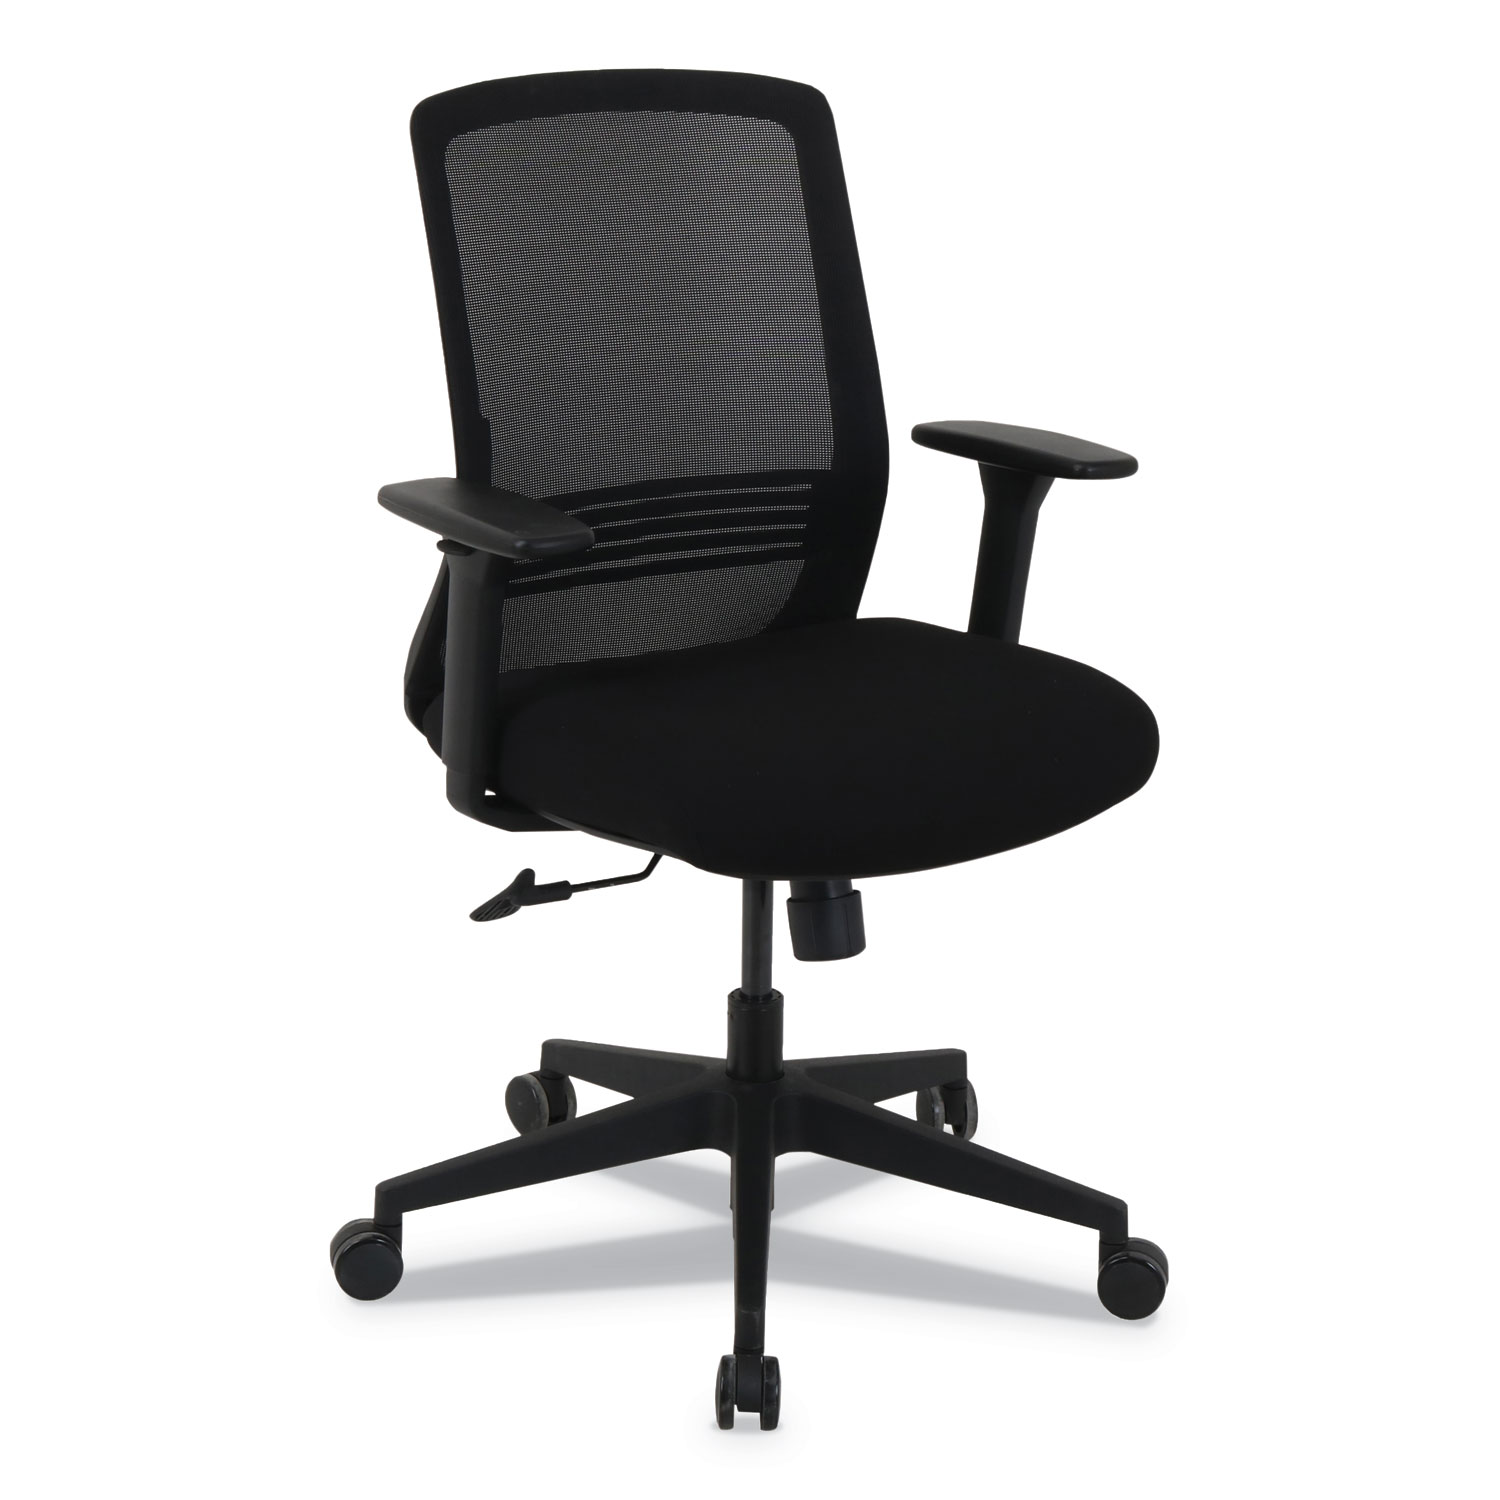  kathy ireland OFFICE by Alera KA44214 kathy ireland OFFICE by Alera Resolute Series Mesh Office Chair, Supports up to 275 lbs., Black Seat/Back, Black Base (ALEKA44214) 